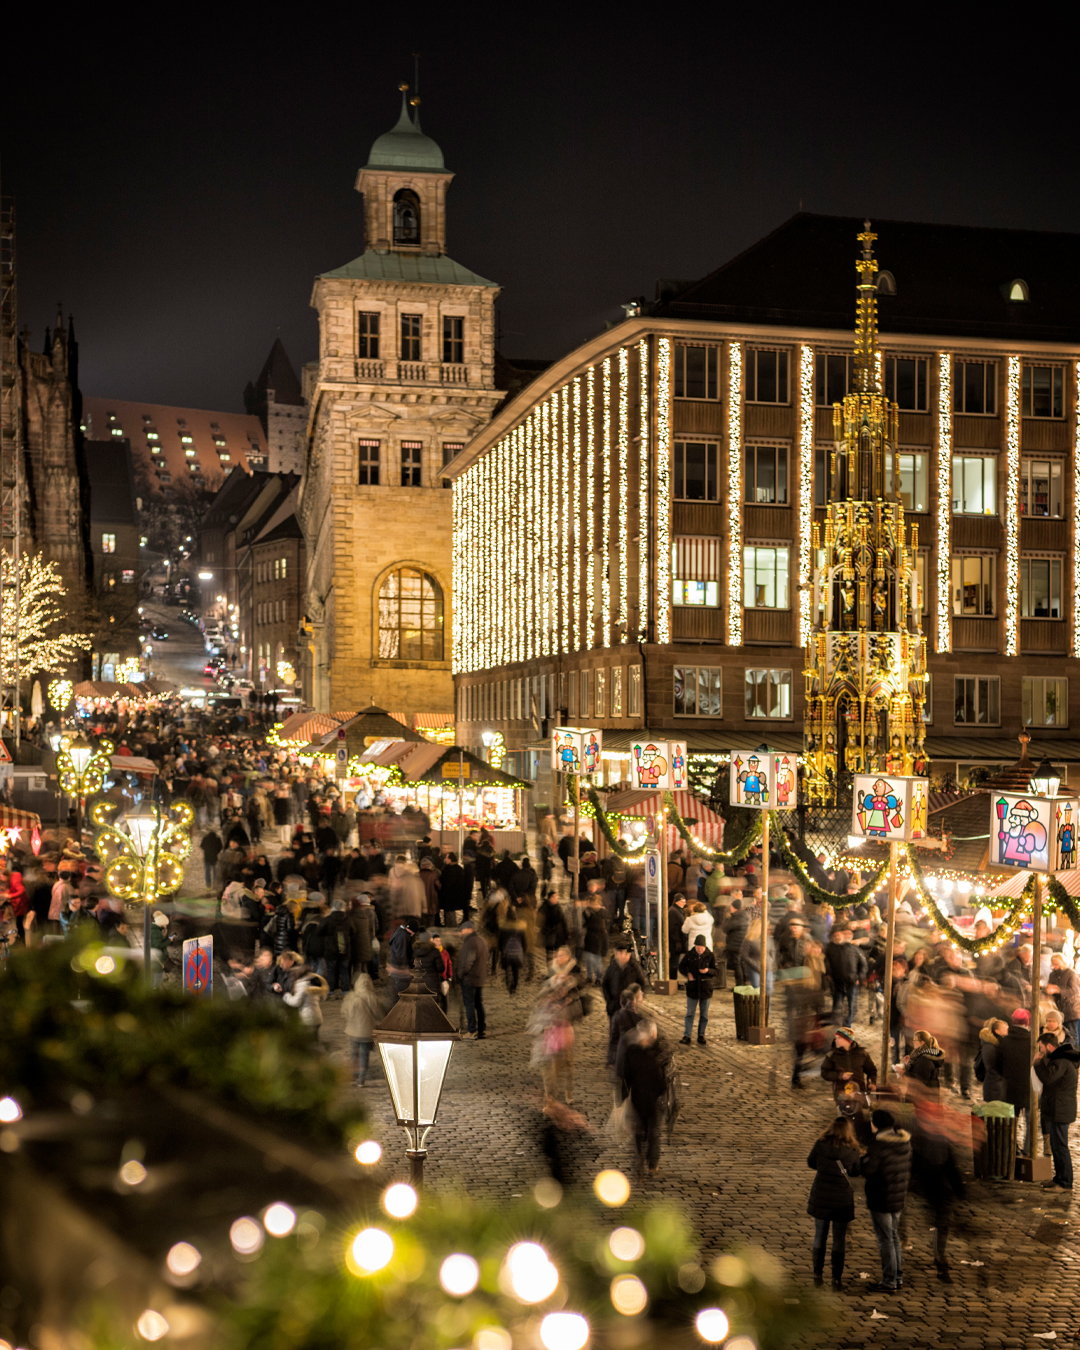 Schöner Brunnen Nürnberg - Best Christmas Markets in Europe